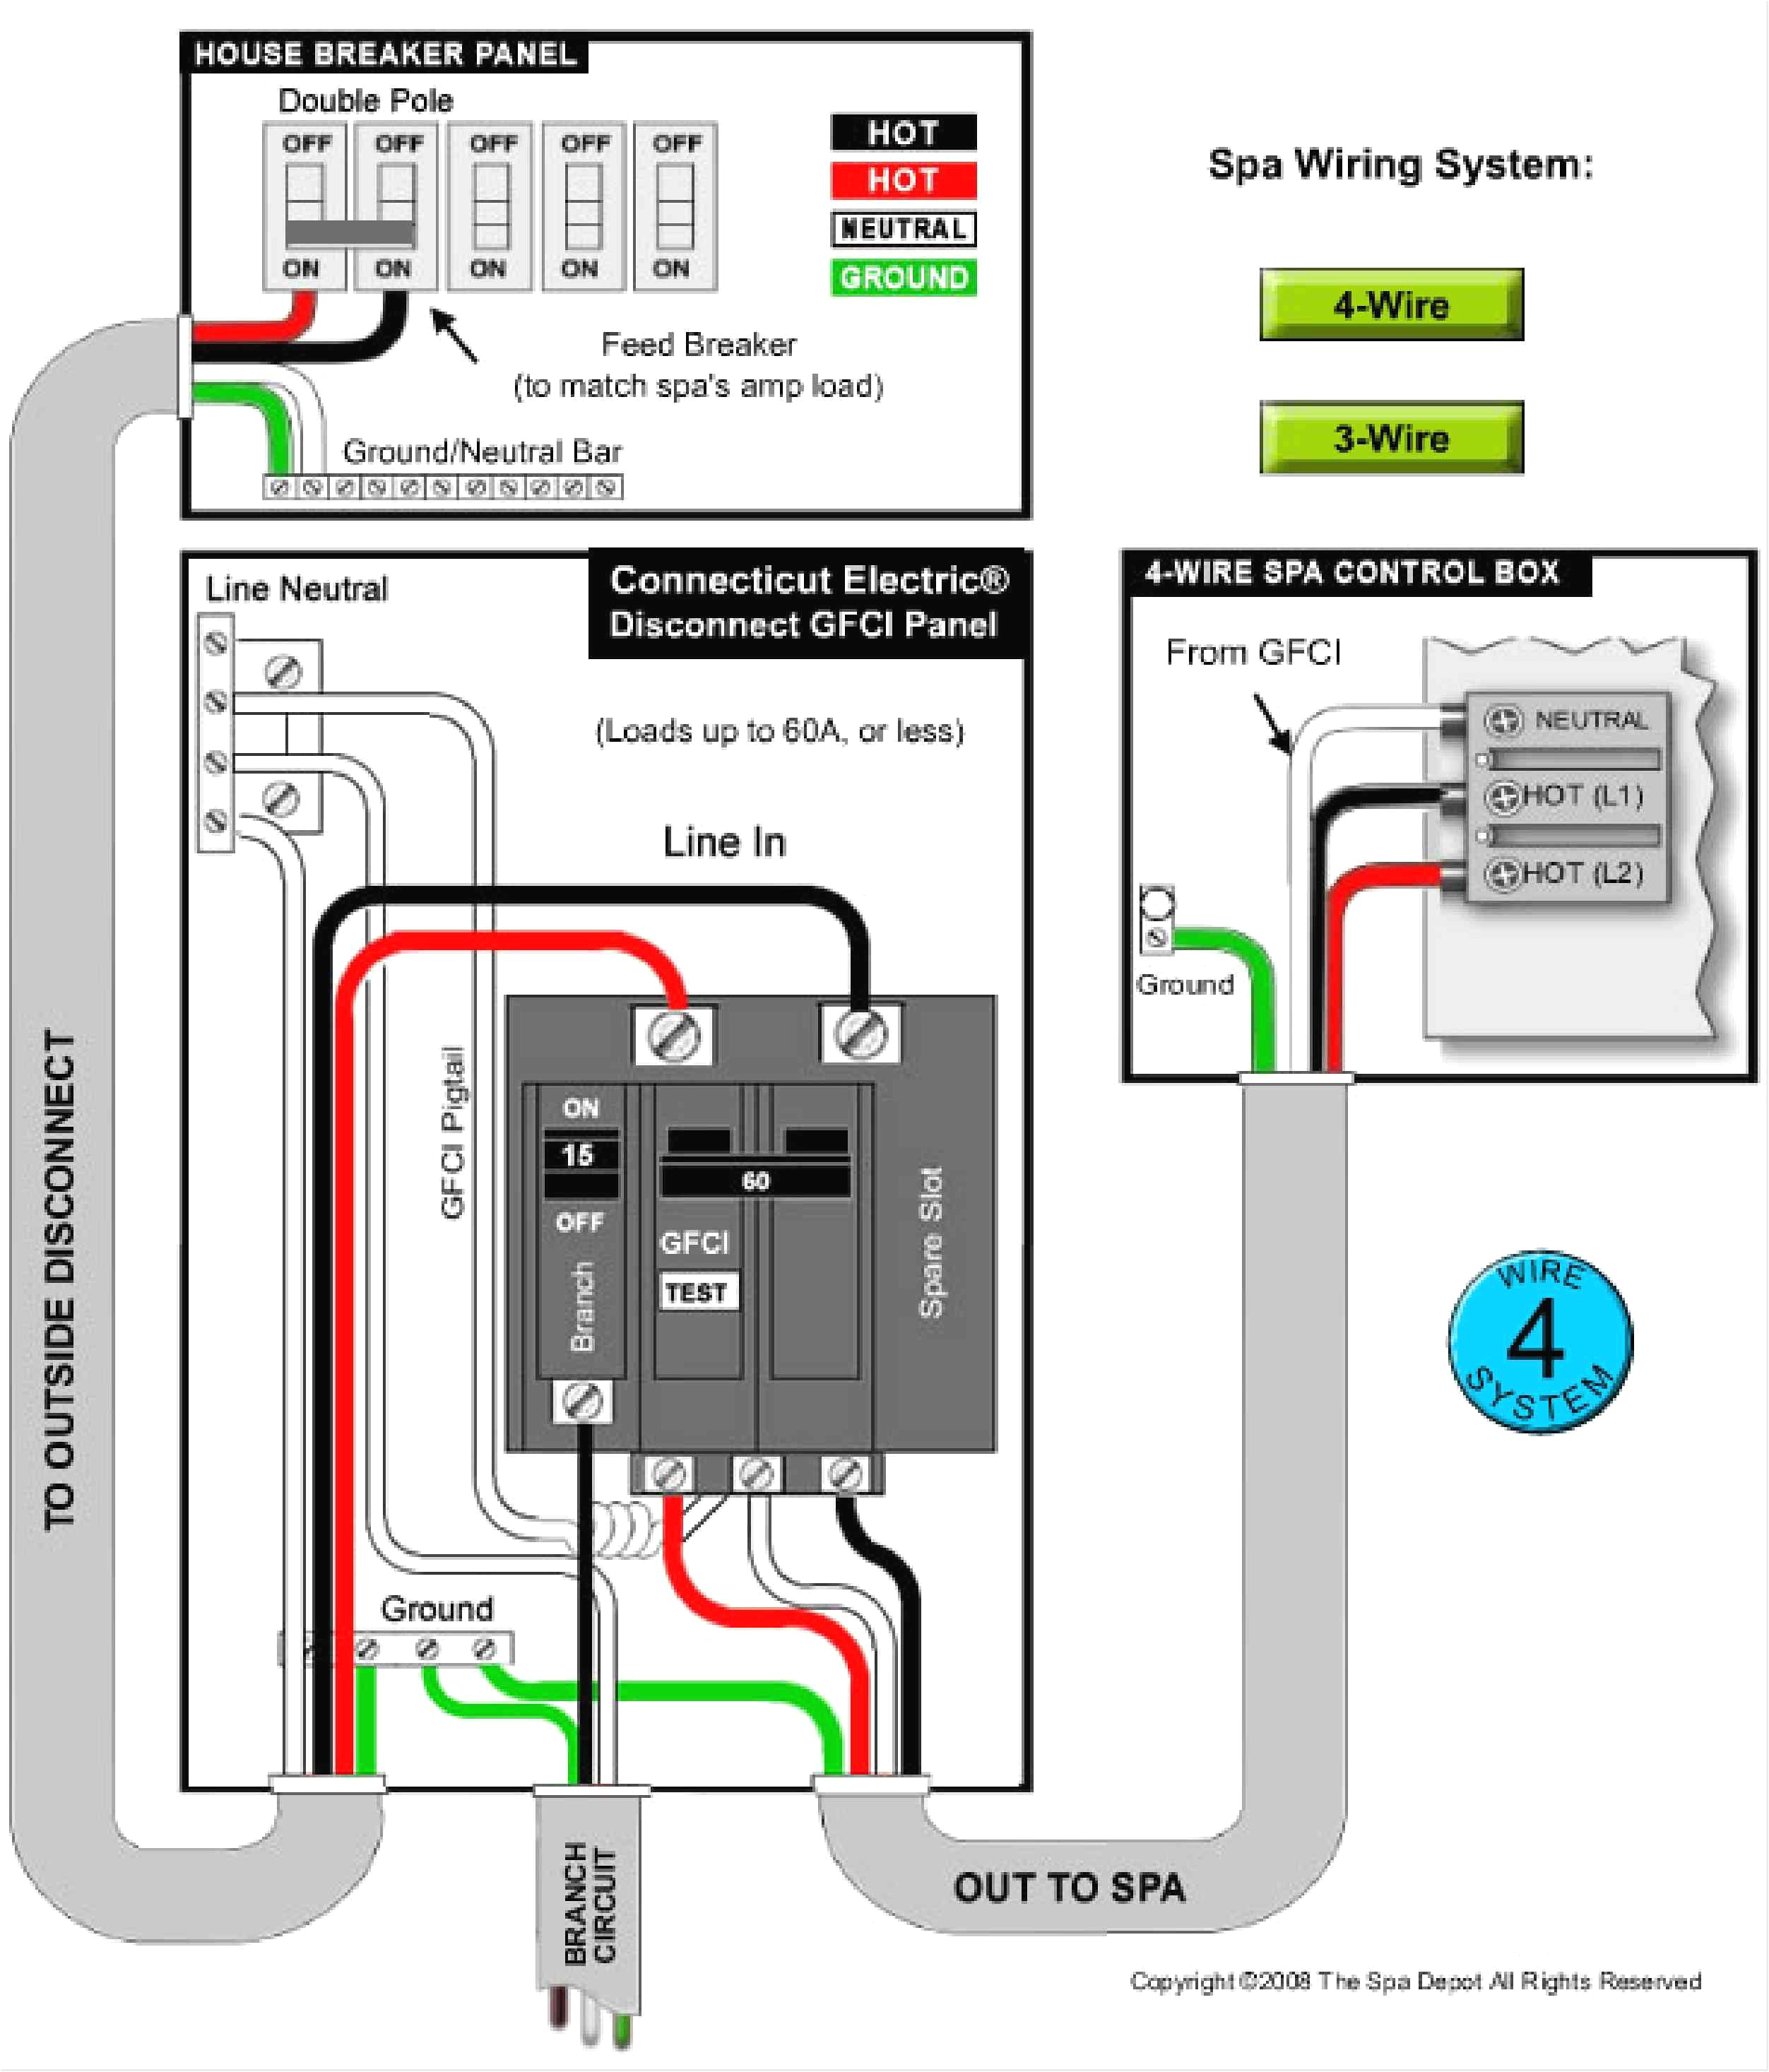 amp wiring diagrams 240 wiring diagram datasourceamp wiring diagrams 240 wiring diagram paper amp wiring diagrams